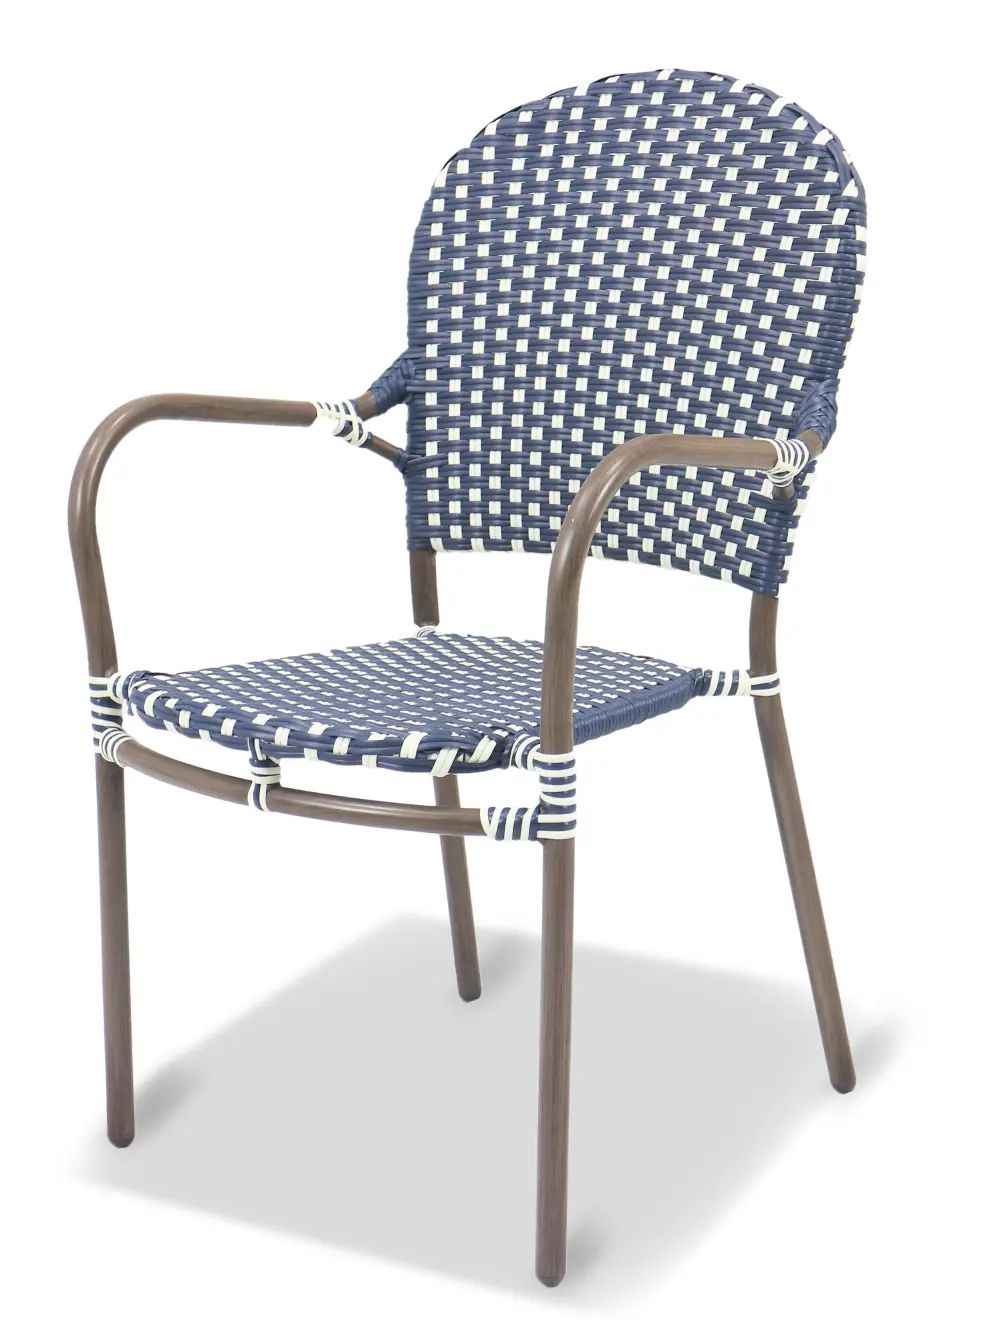 Outdoor Patio Chair in Blue - Mendocino-1